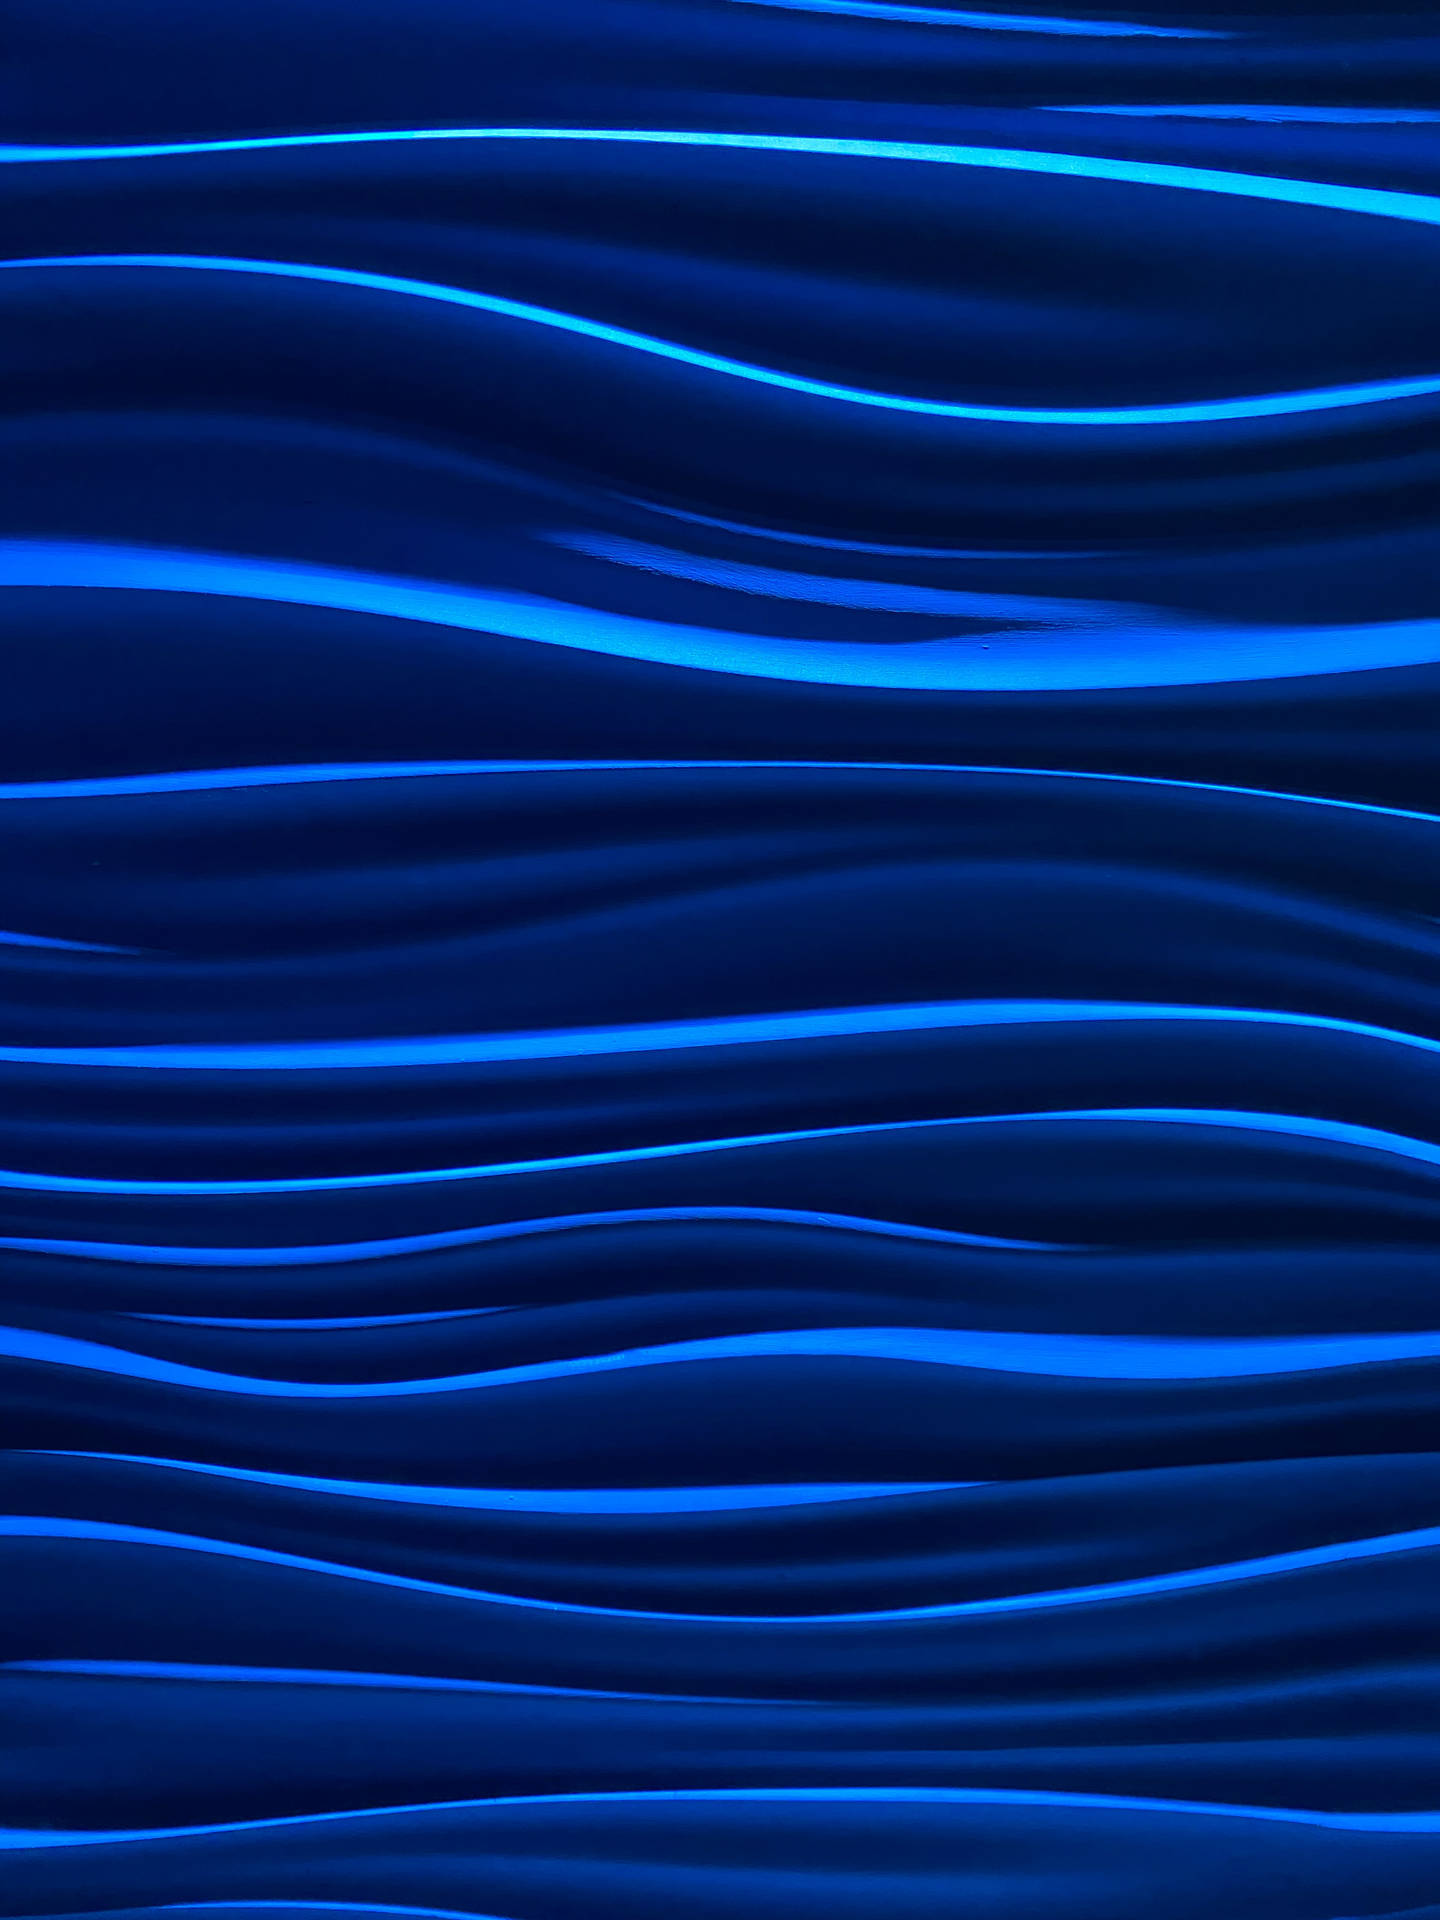 Blue Waves Aesthetic Pattern